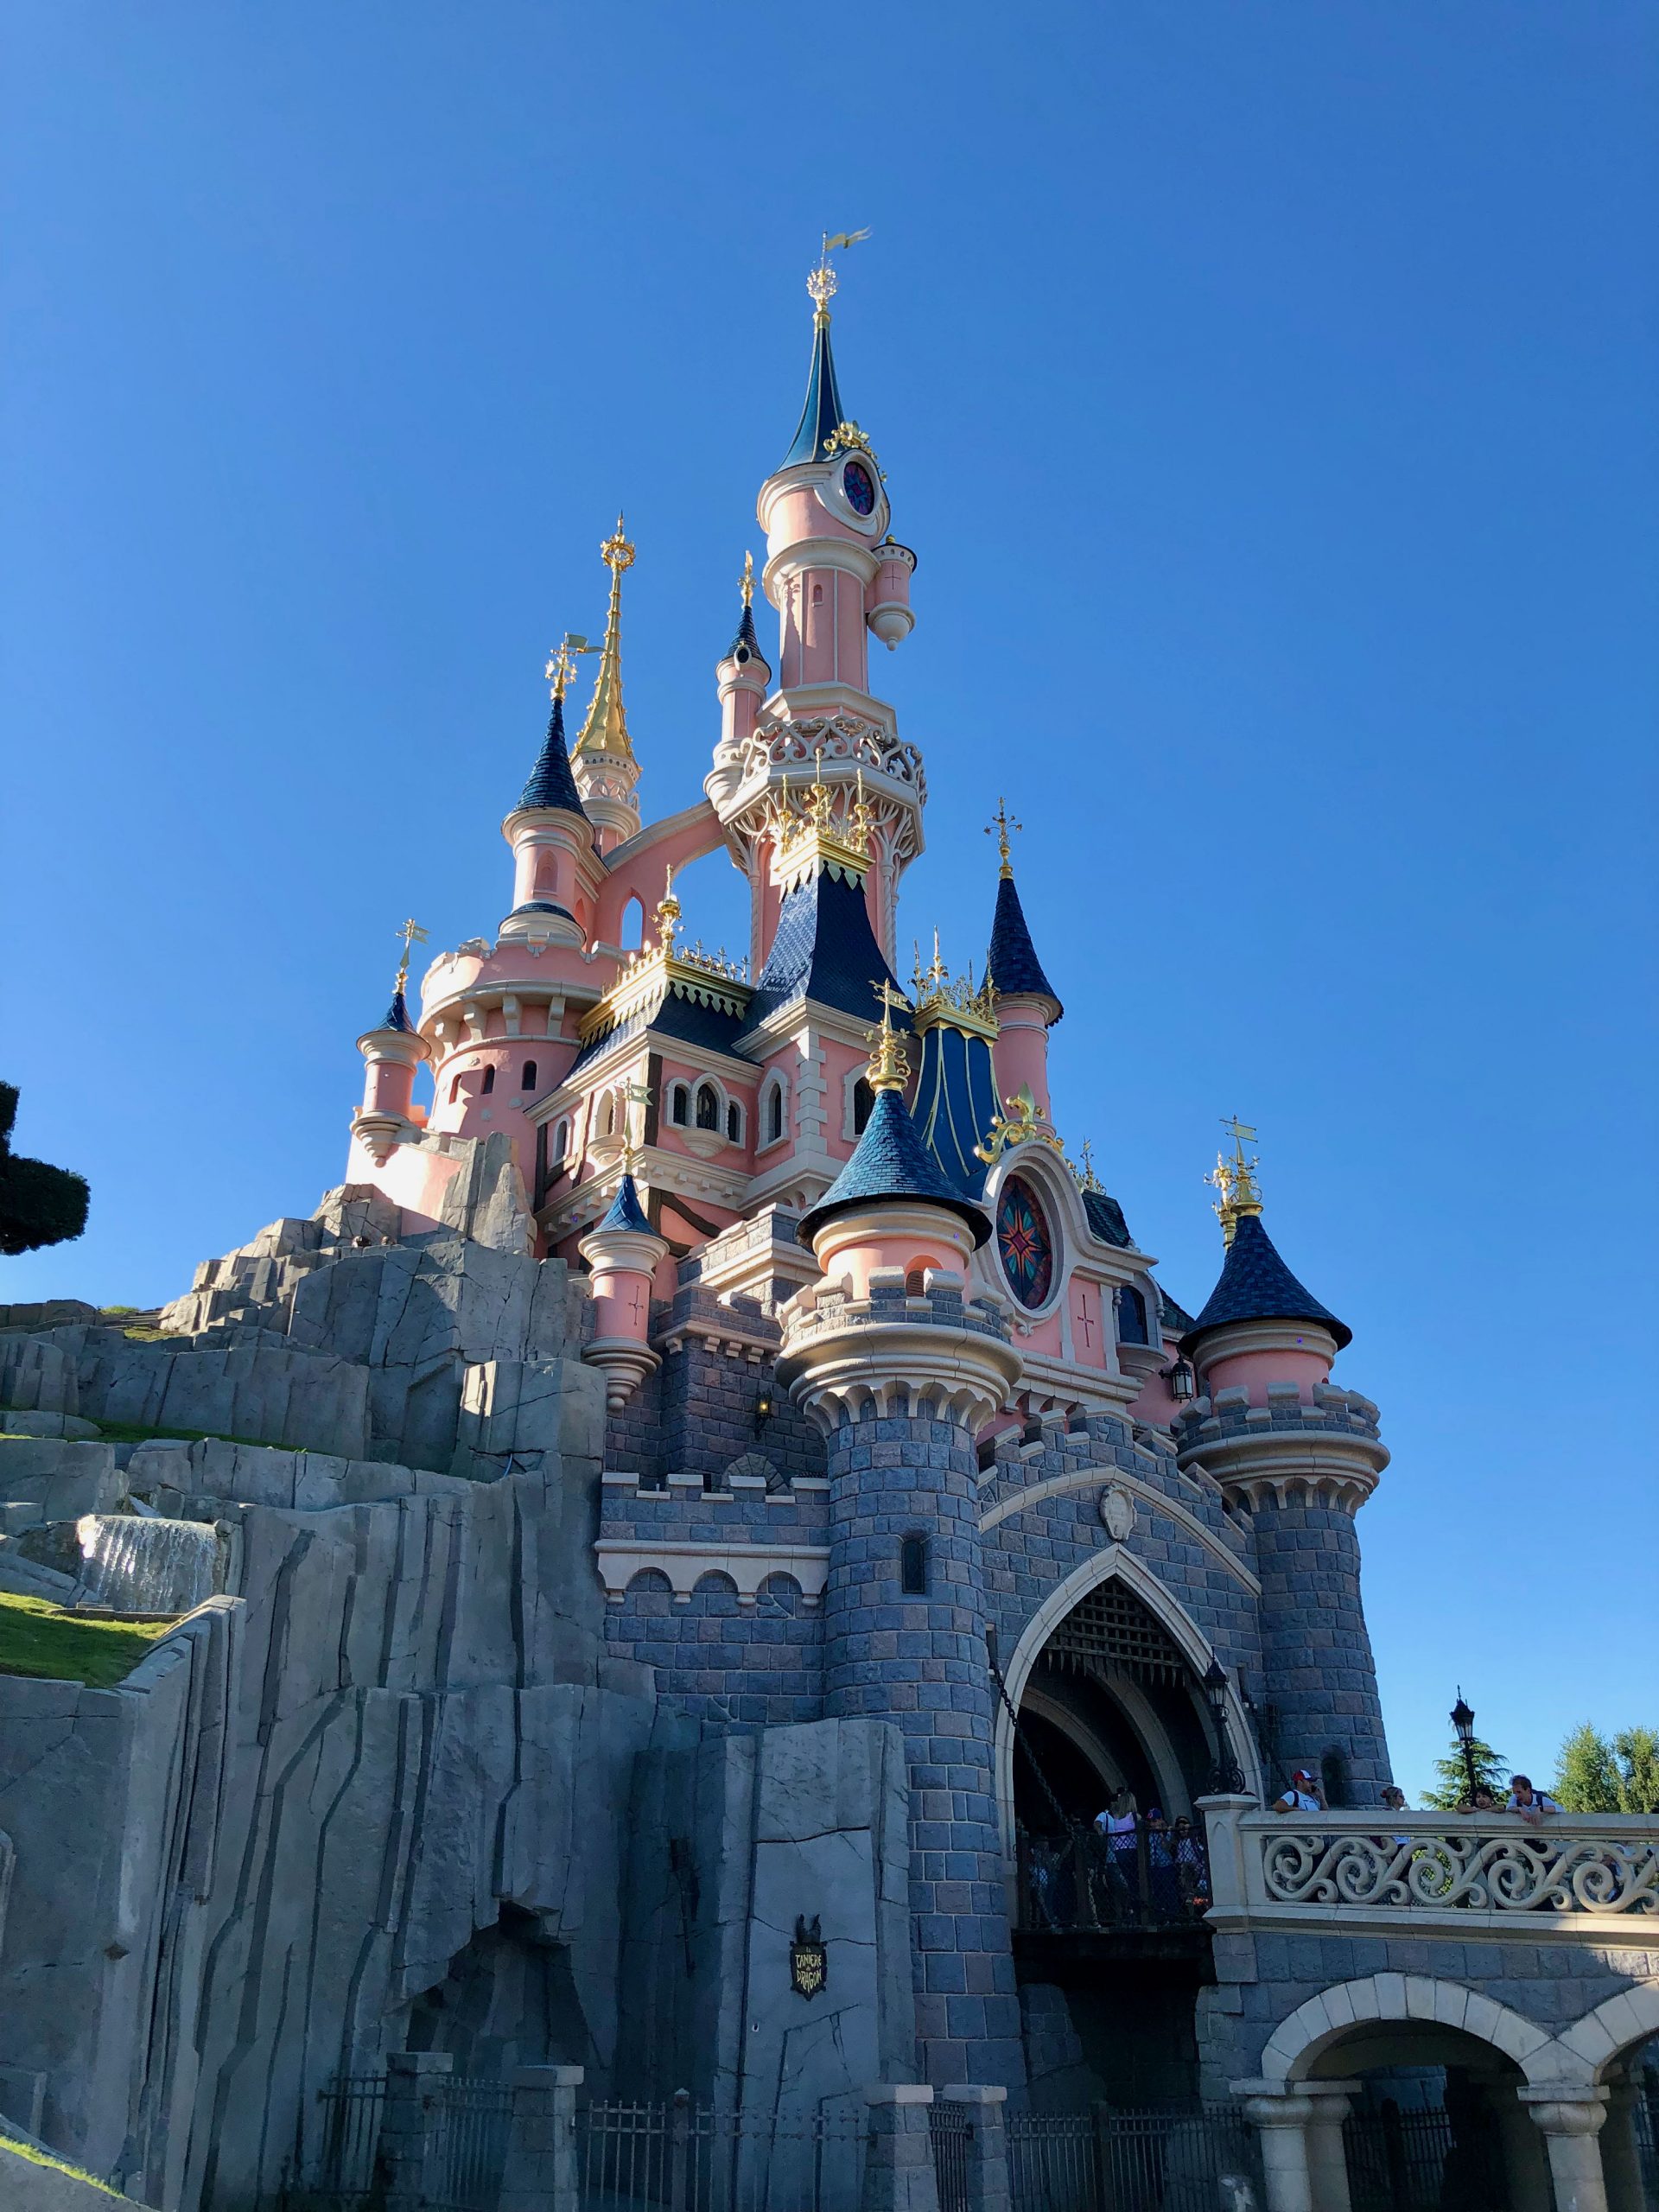 5 Reasons Why You Should Visit Disneyland® Paris This Summer